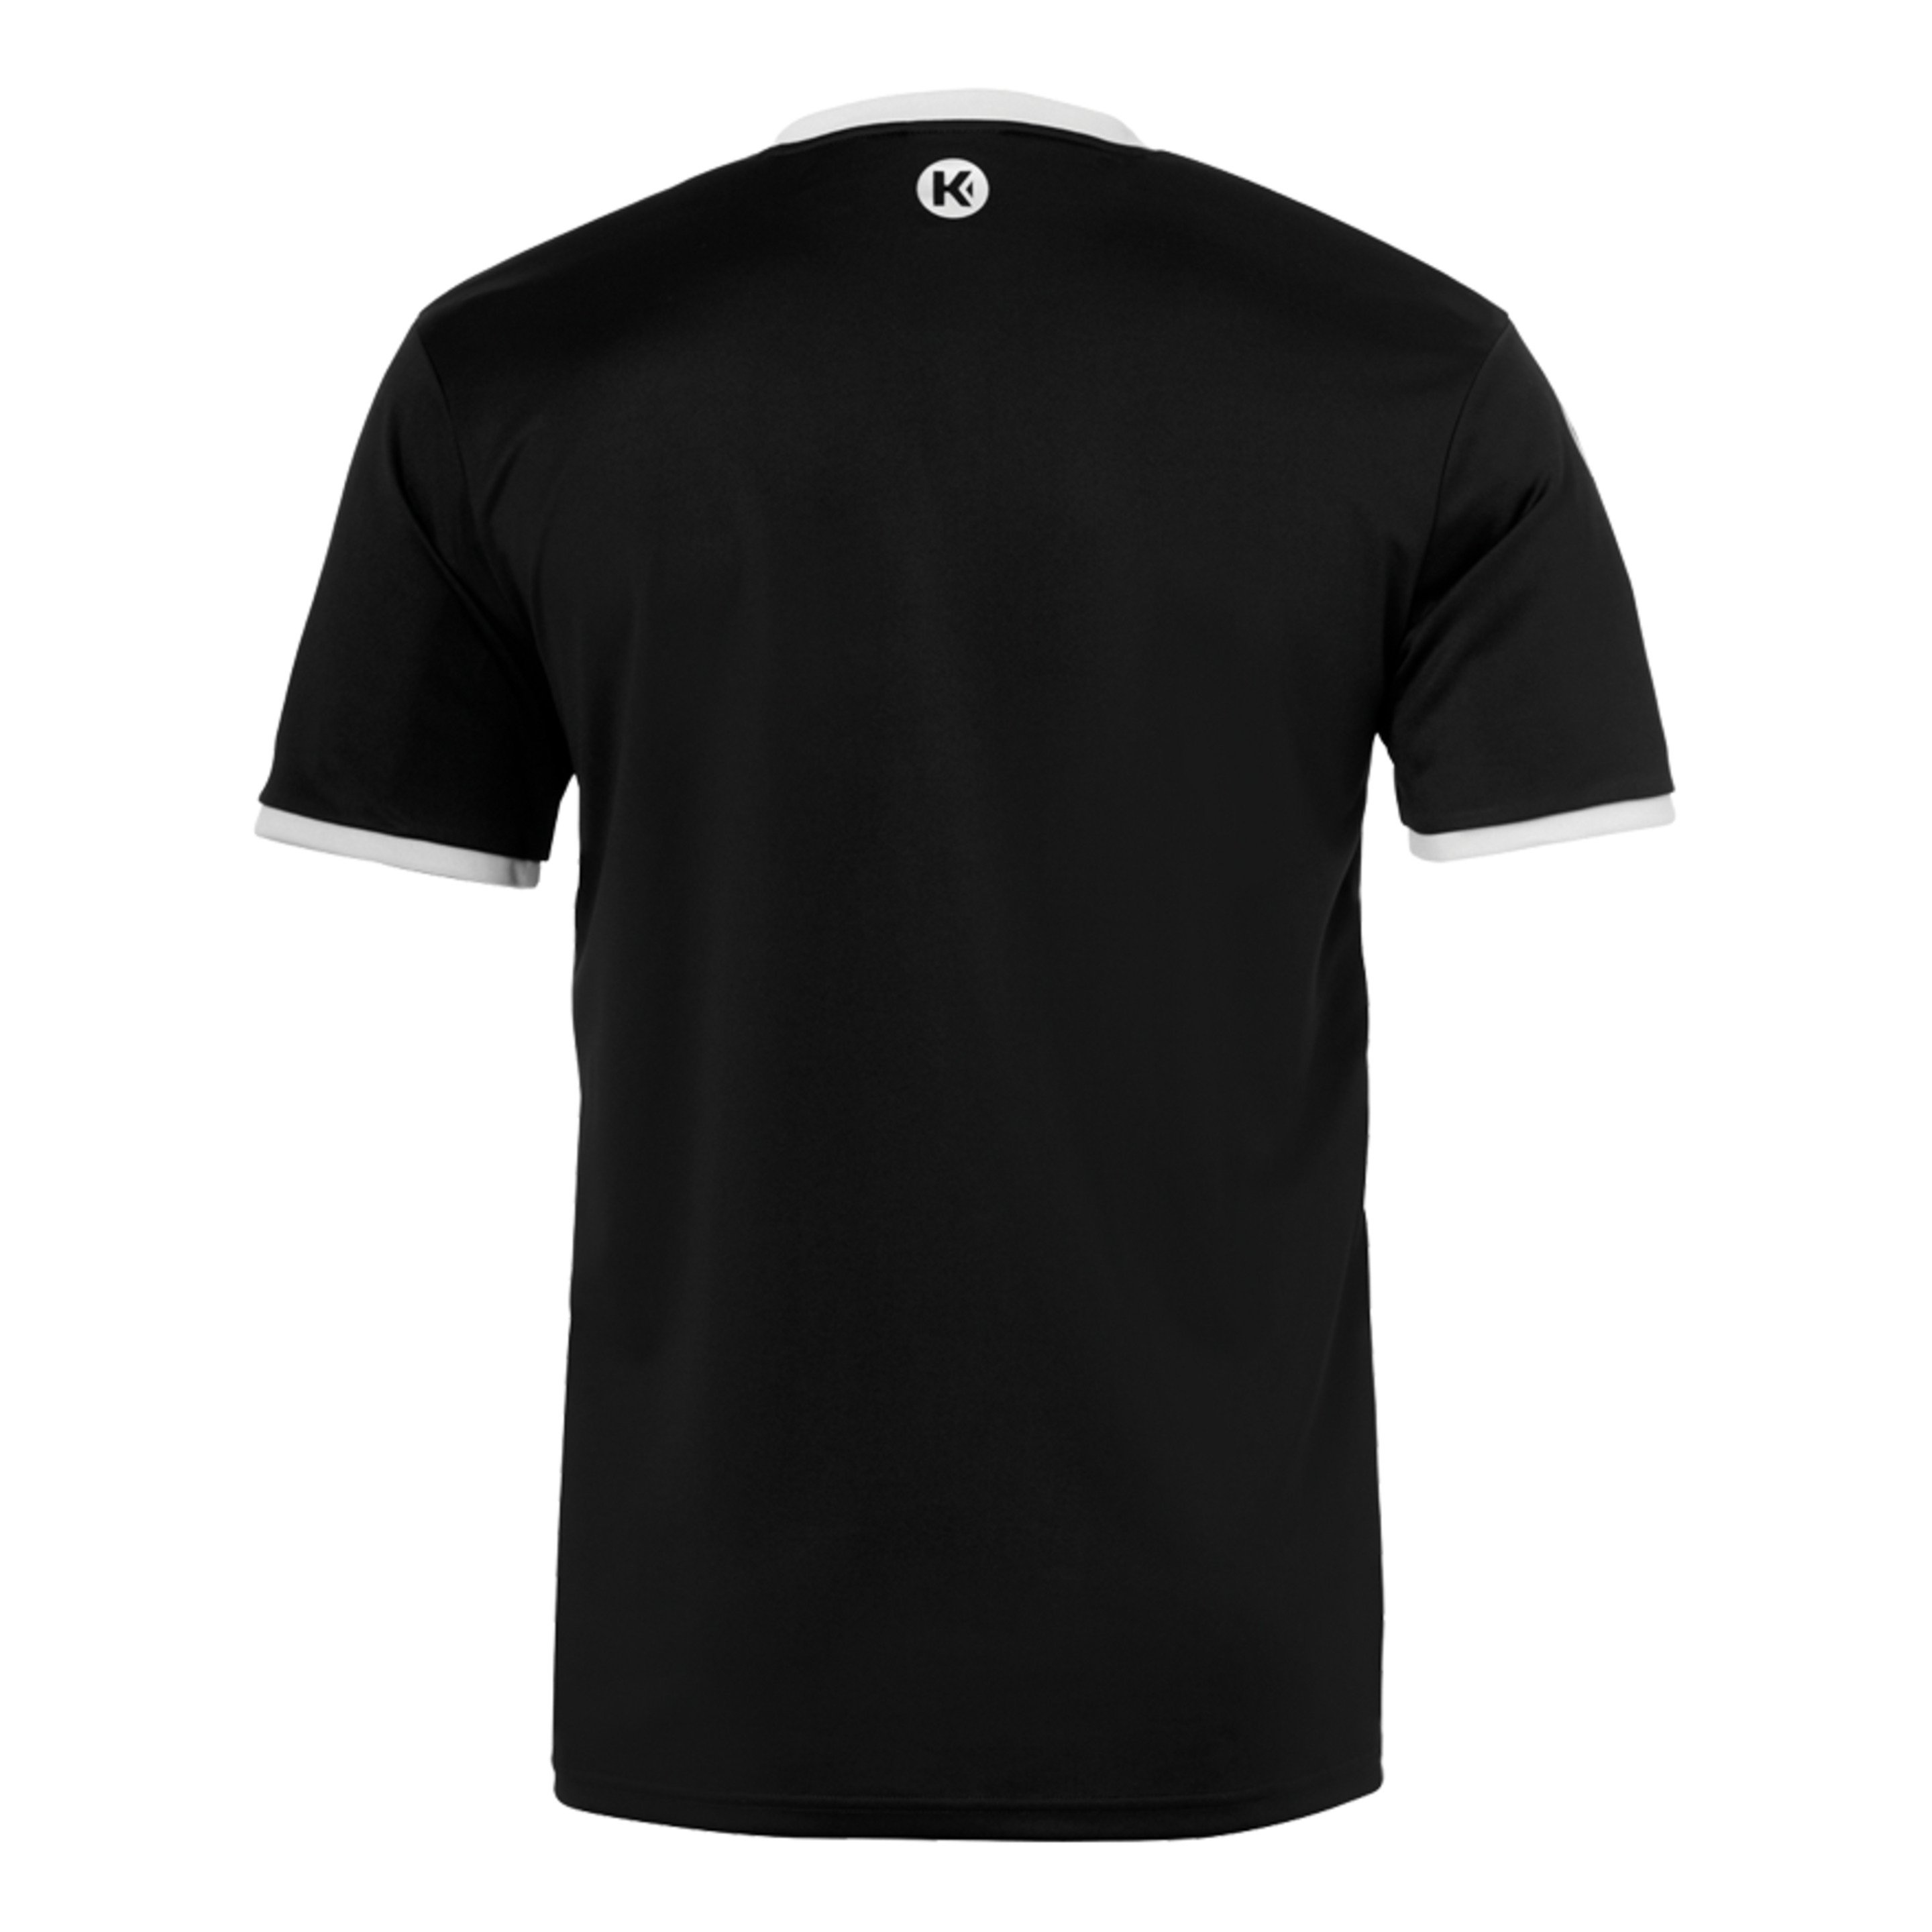 Curve Camiseta Negro/blanco Kempa